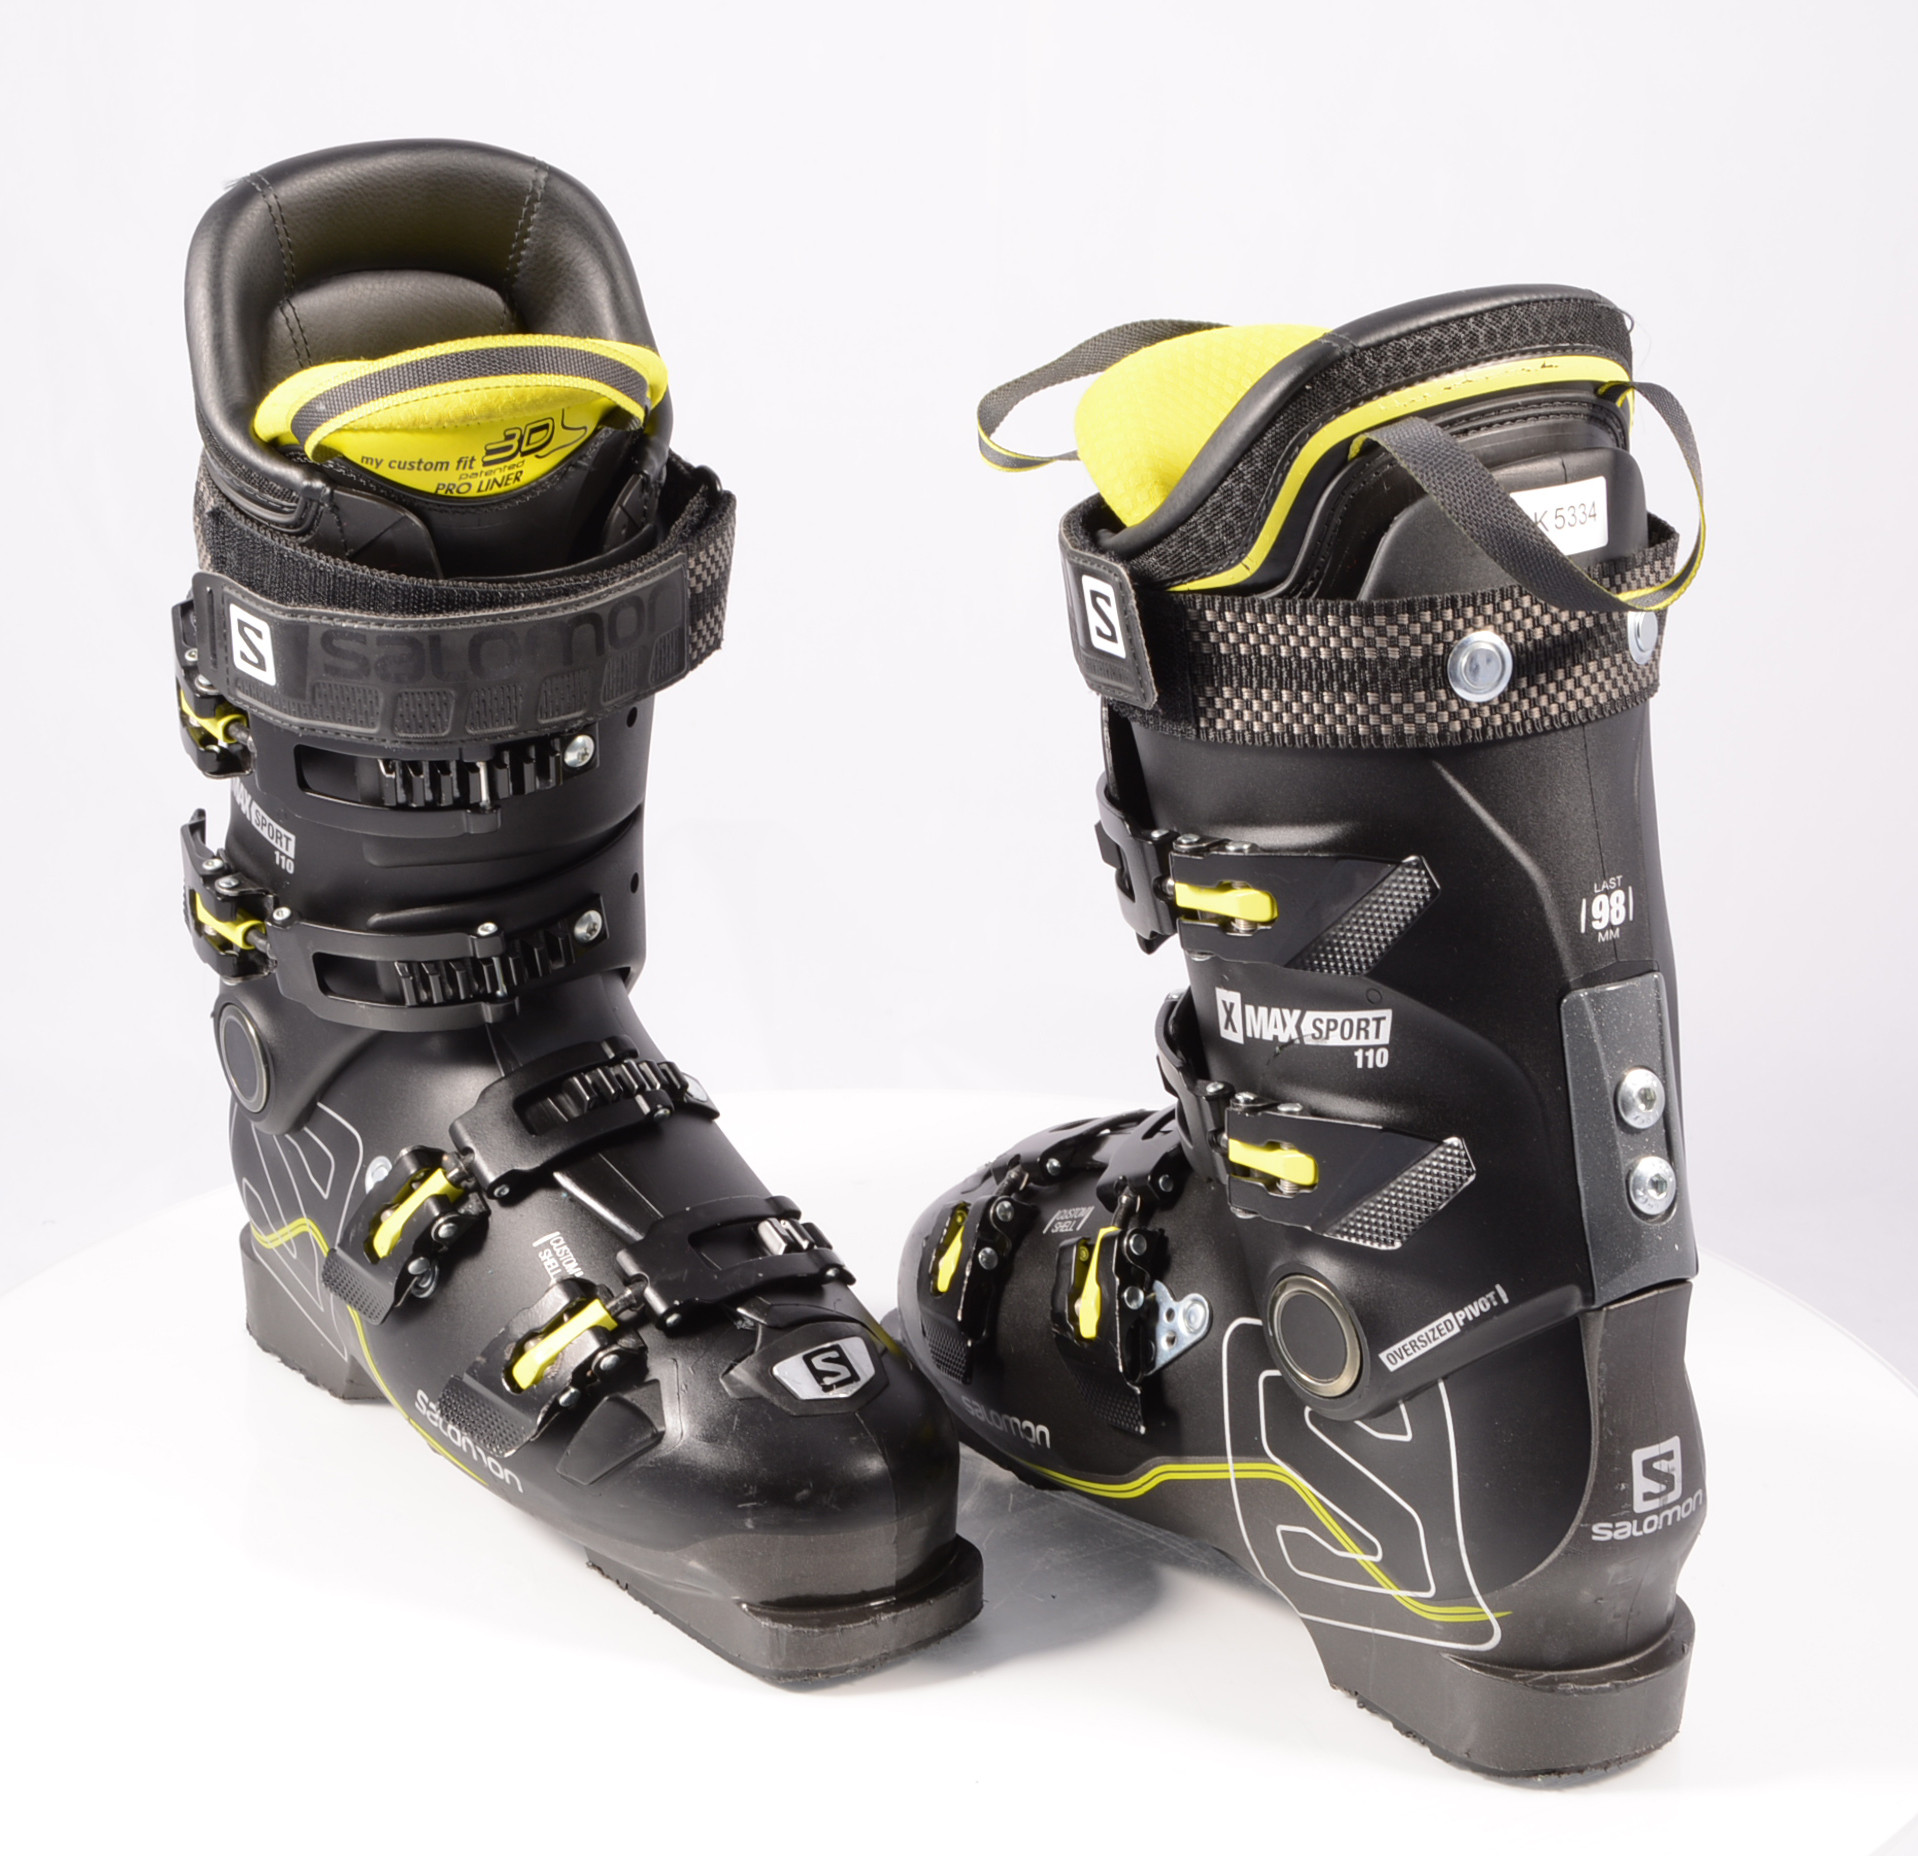 Prijs geleidelijk Herziening ski boots SALOMON X MAX 110 SPORT 2019, My custom fit 3D, Pro liner, Custom  shell, Oversized pivot - Mardosport.com